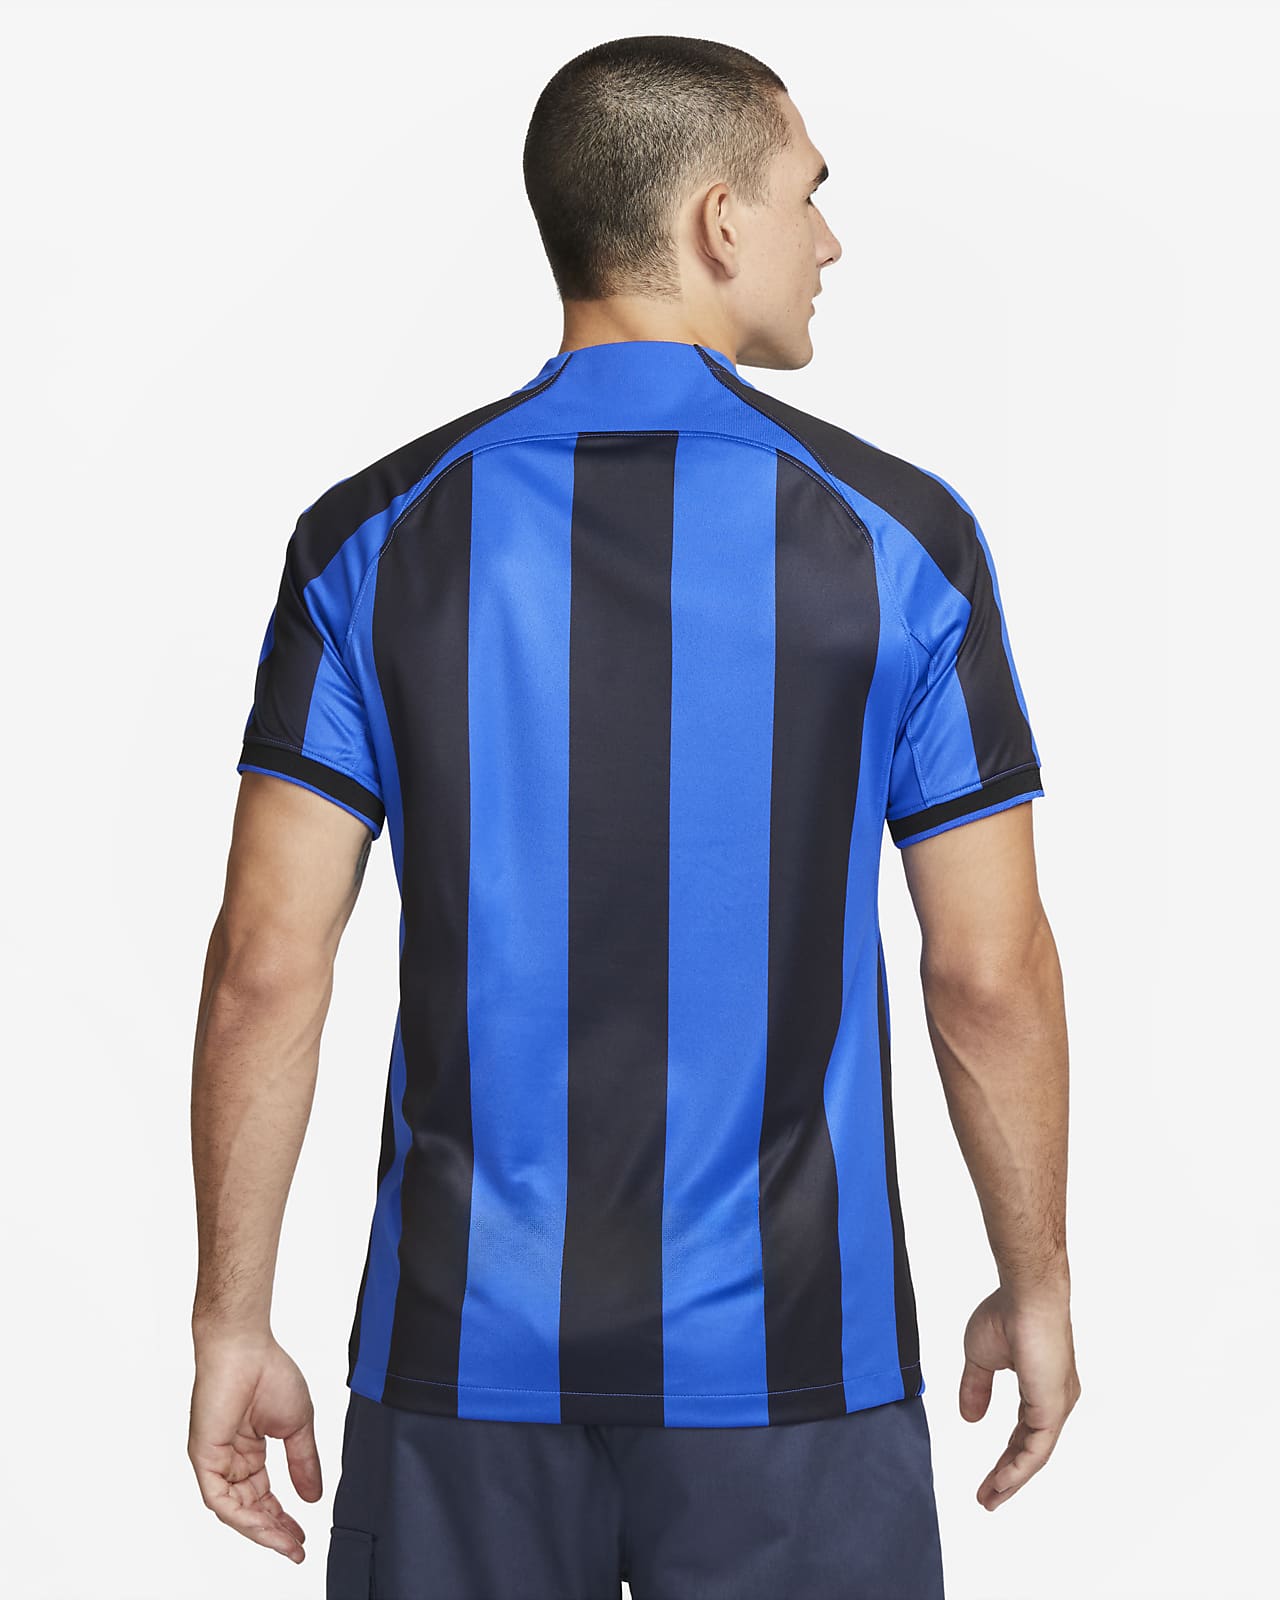 Hoorzitting schrijven ZuidAmerika Inter Milan 2022/23 Stadium Home Men's Nike Dri-FIT Football Shirt. Nike LU